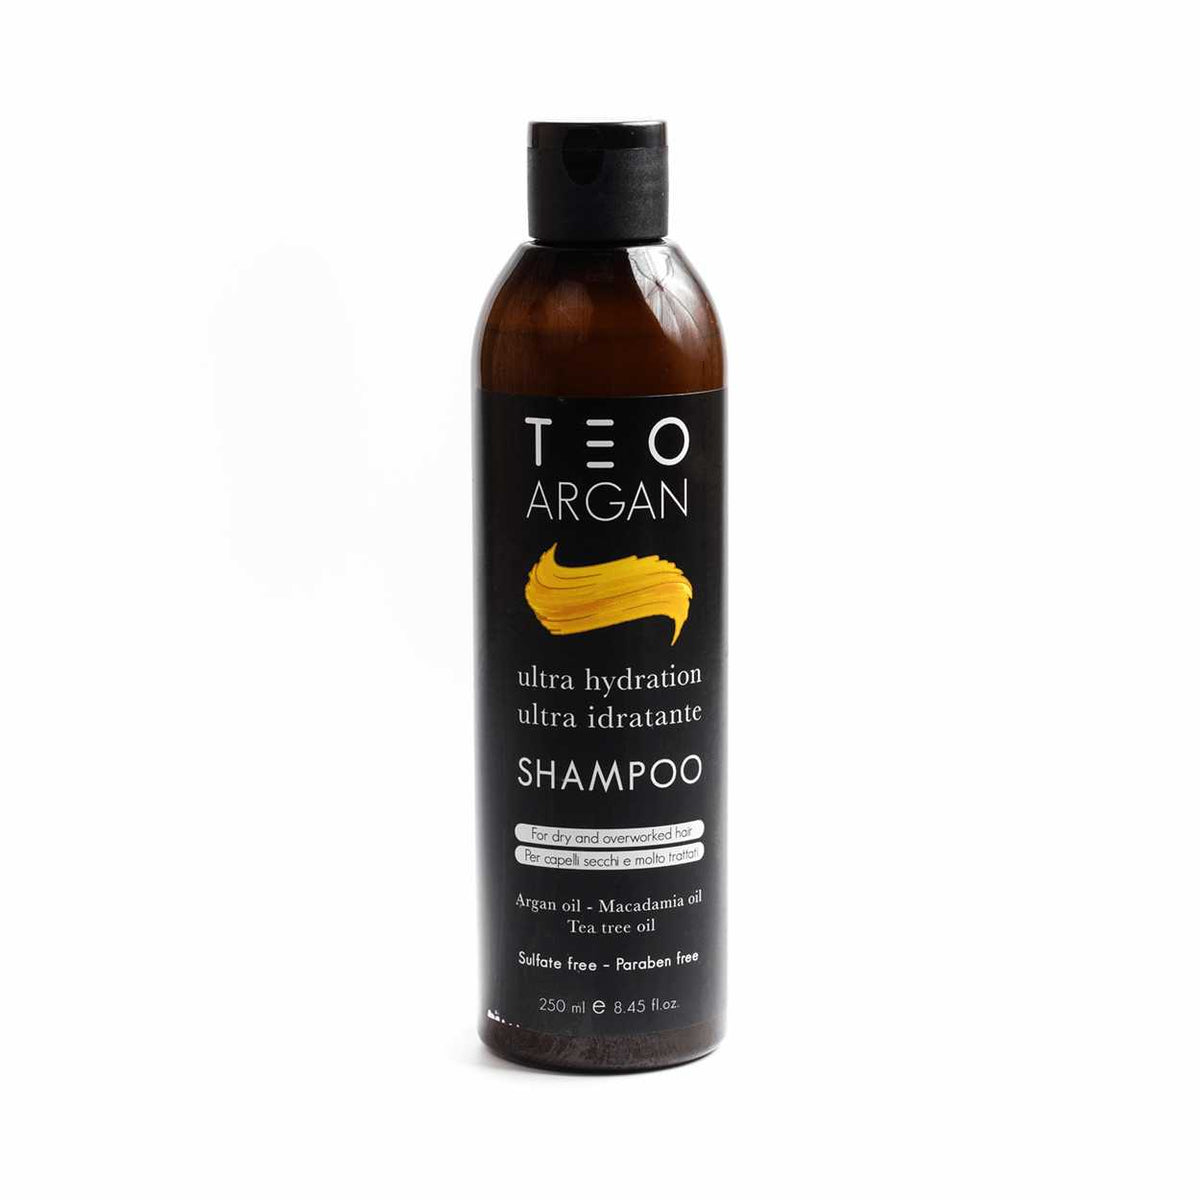 Teotema Argan Shampoo | Ultra Hydration For Dry Hair | Paraben Free | SLES-SLS Free